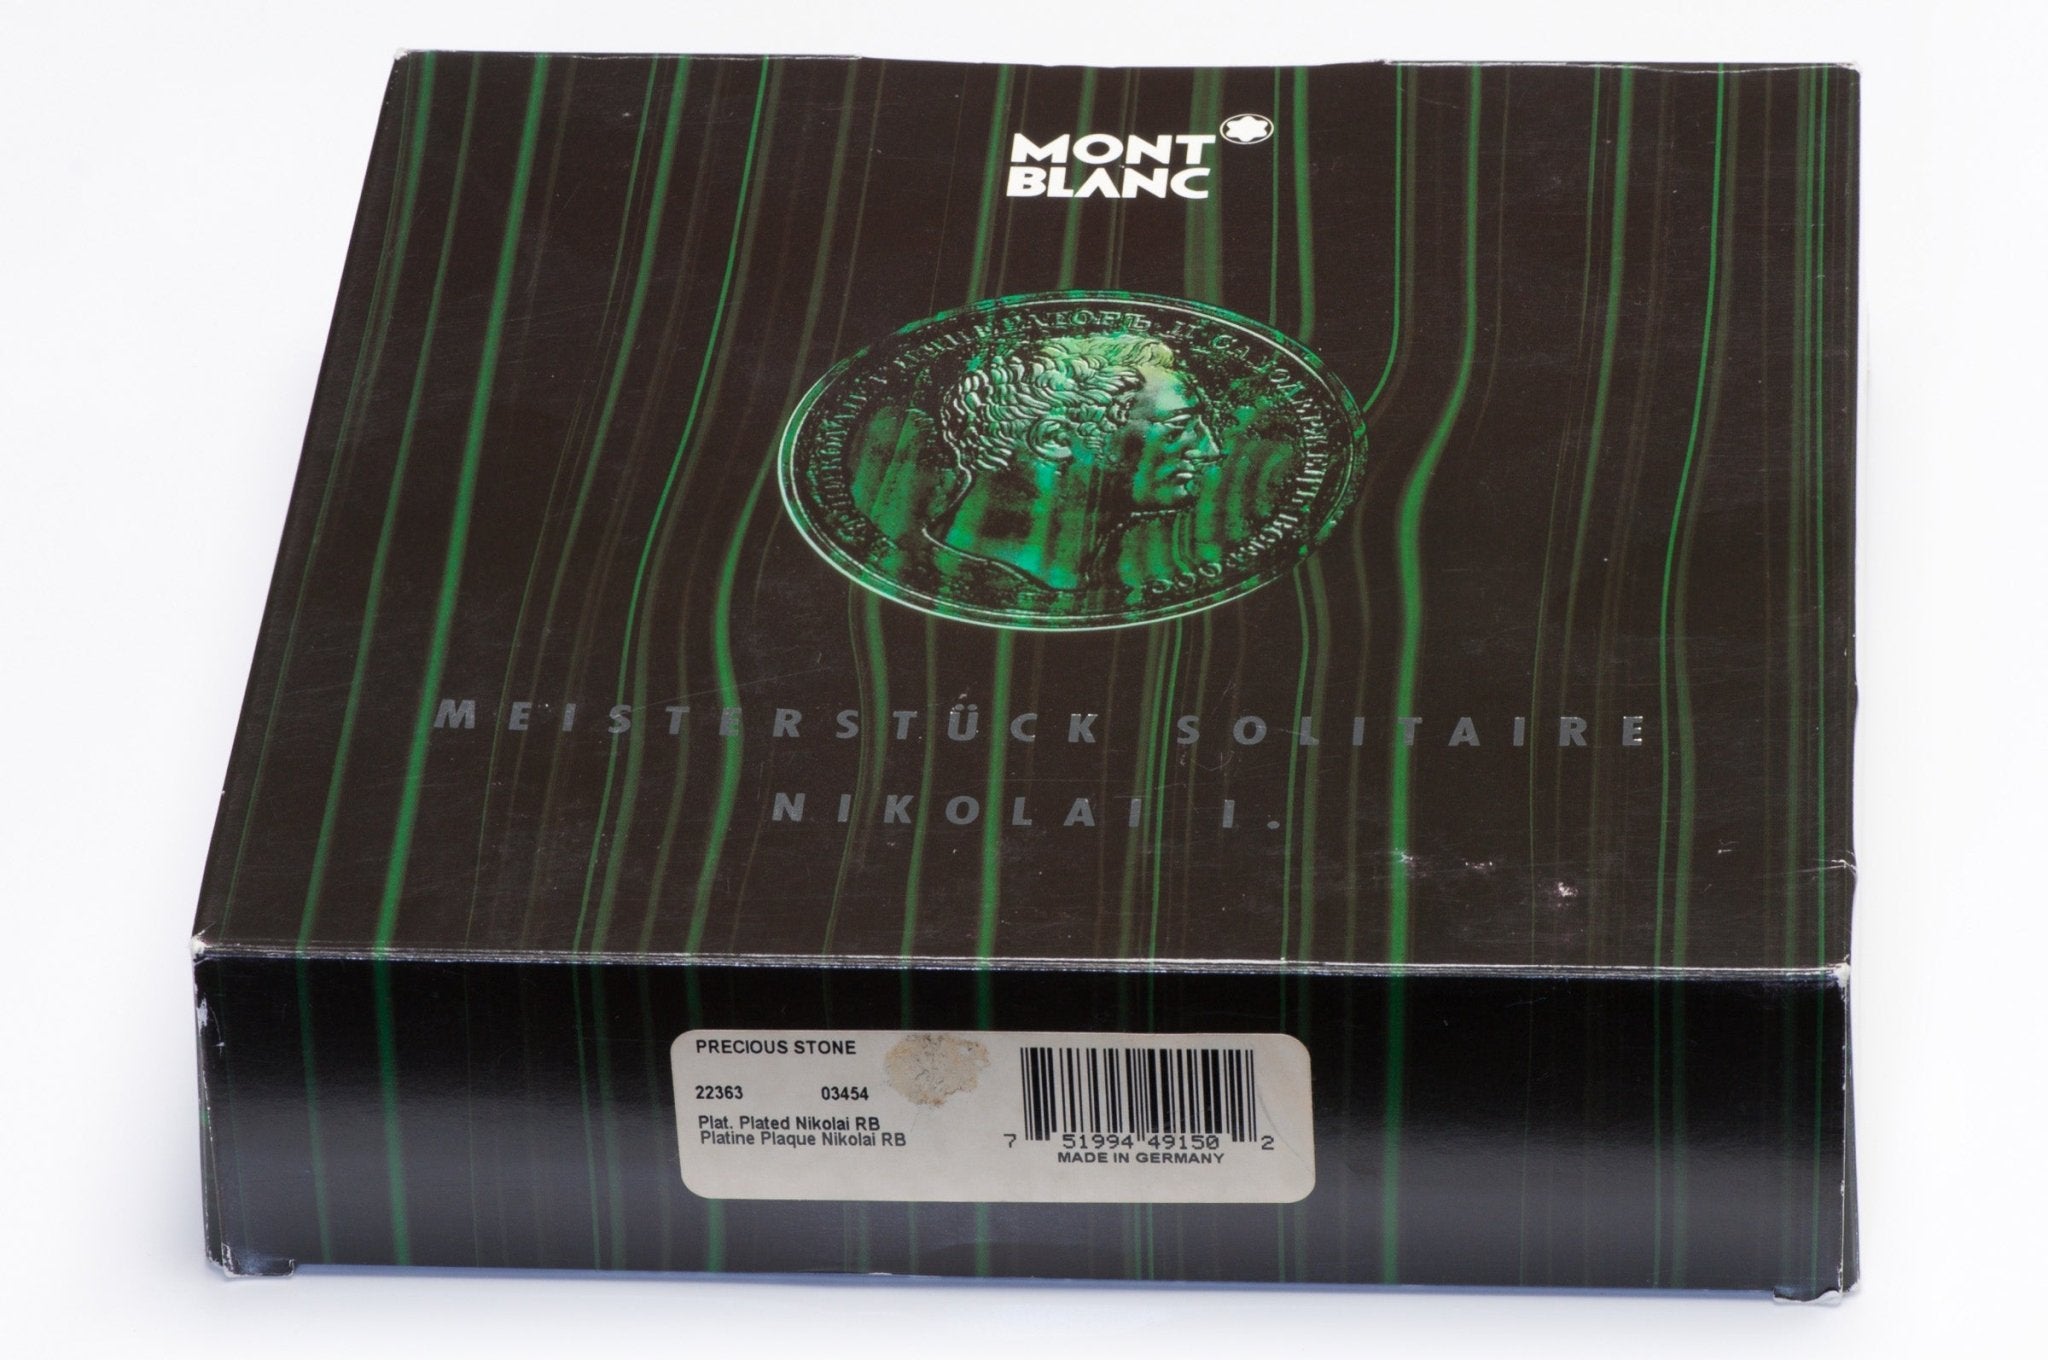 Montblanc Meisterstuck Solitaire Nikolai 1 Platinum Plate Rollerball Pen